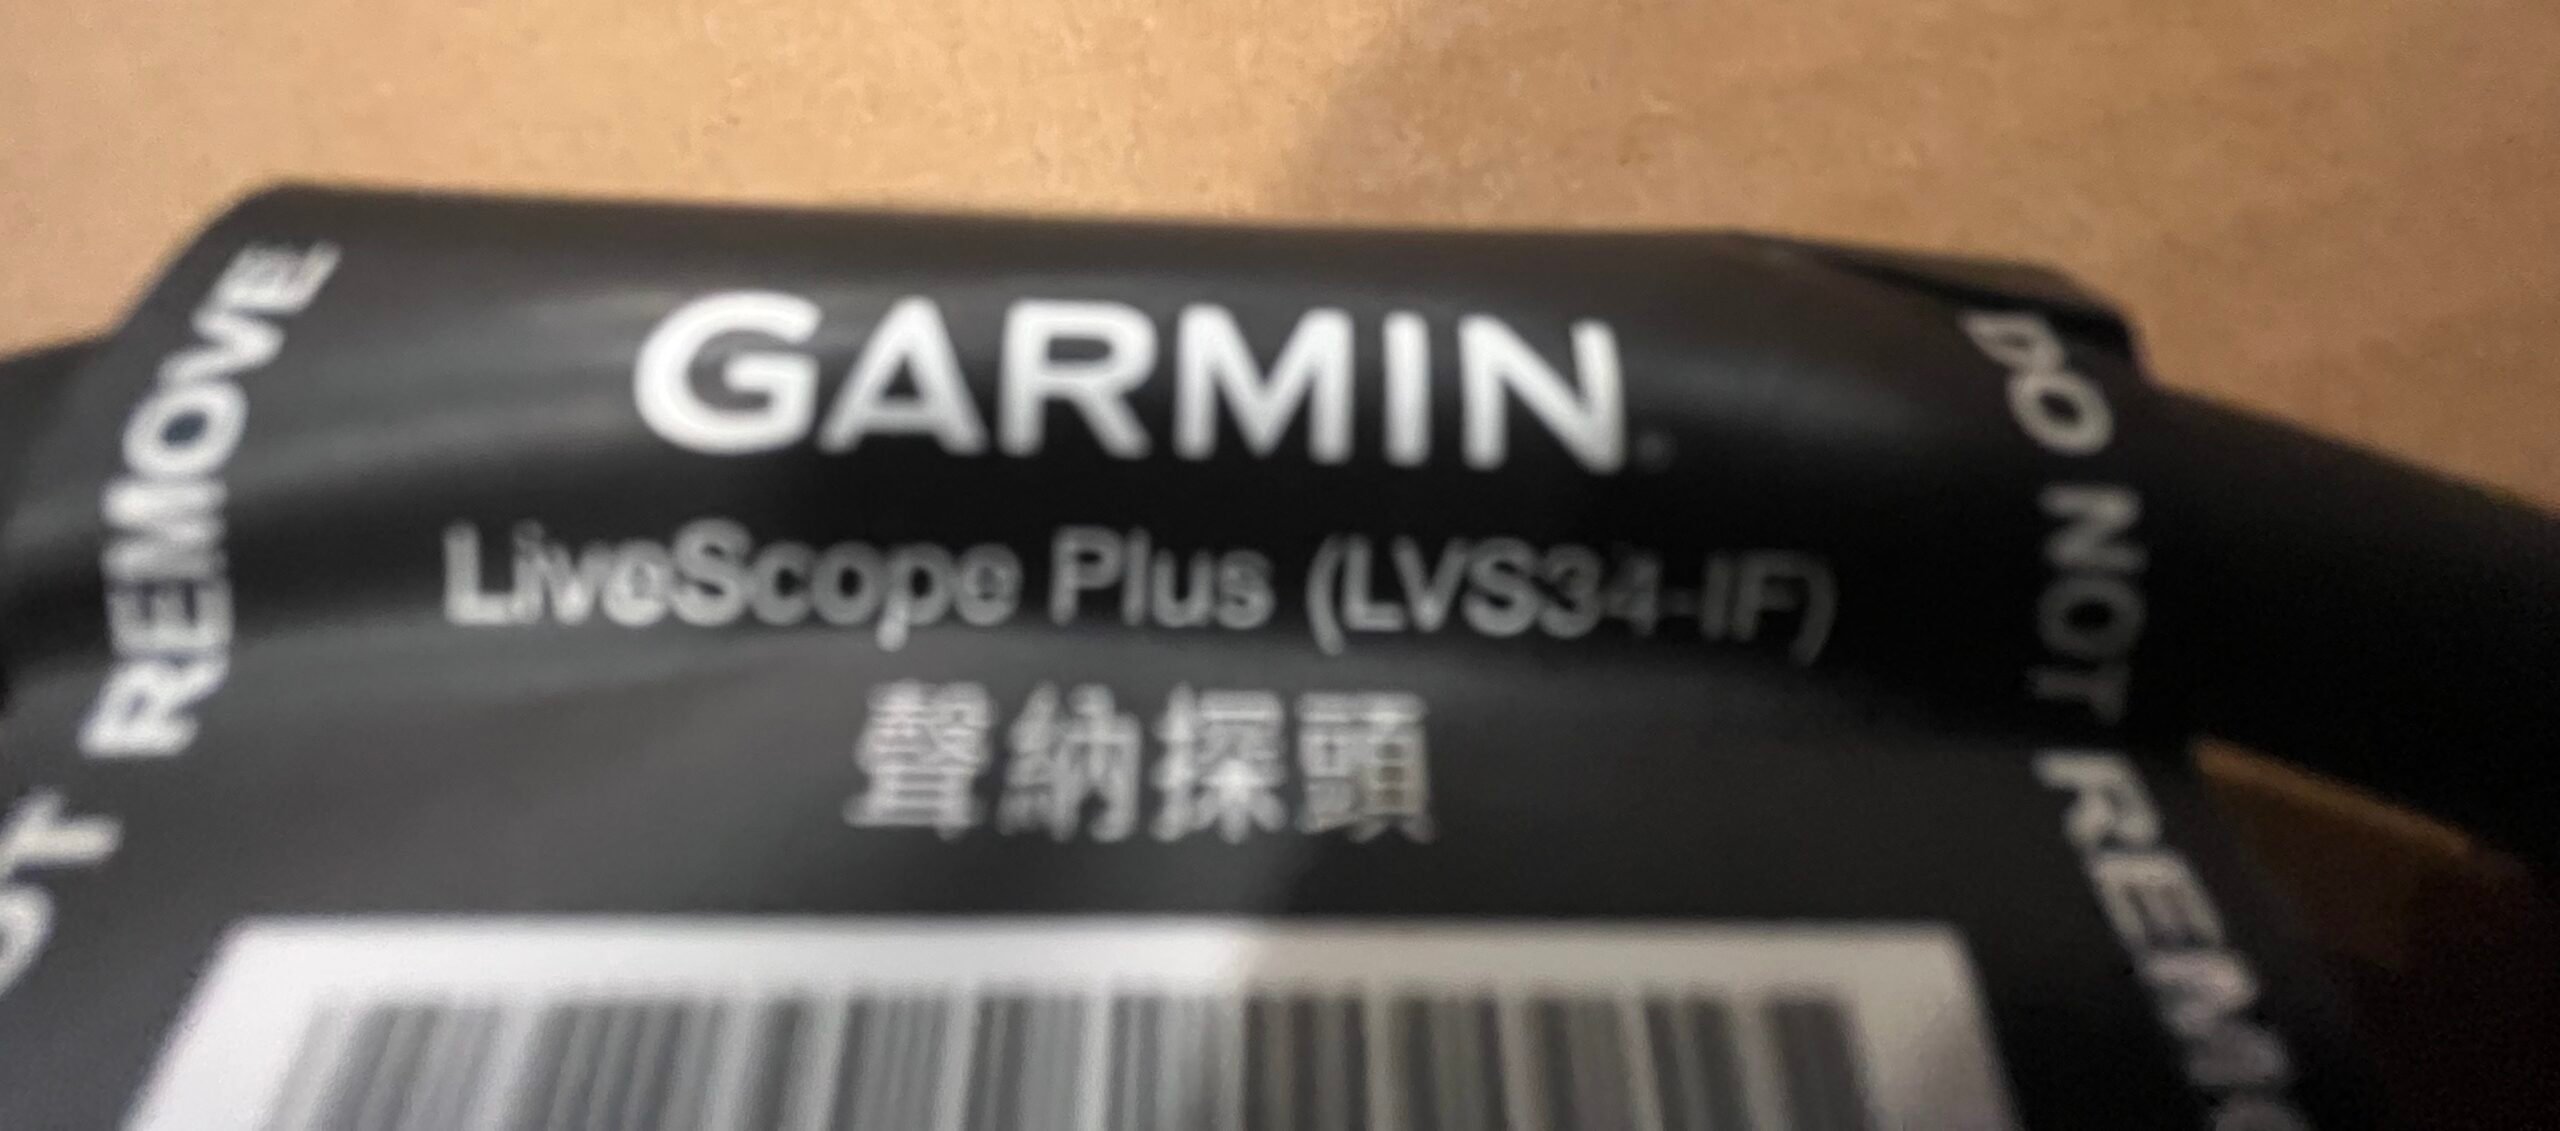 Garmin LiveScope Plus LVS34-IF Transducers 010-02706-20